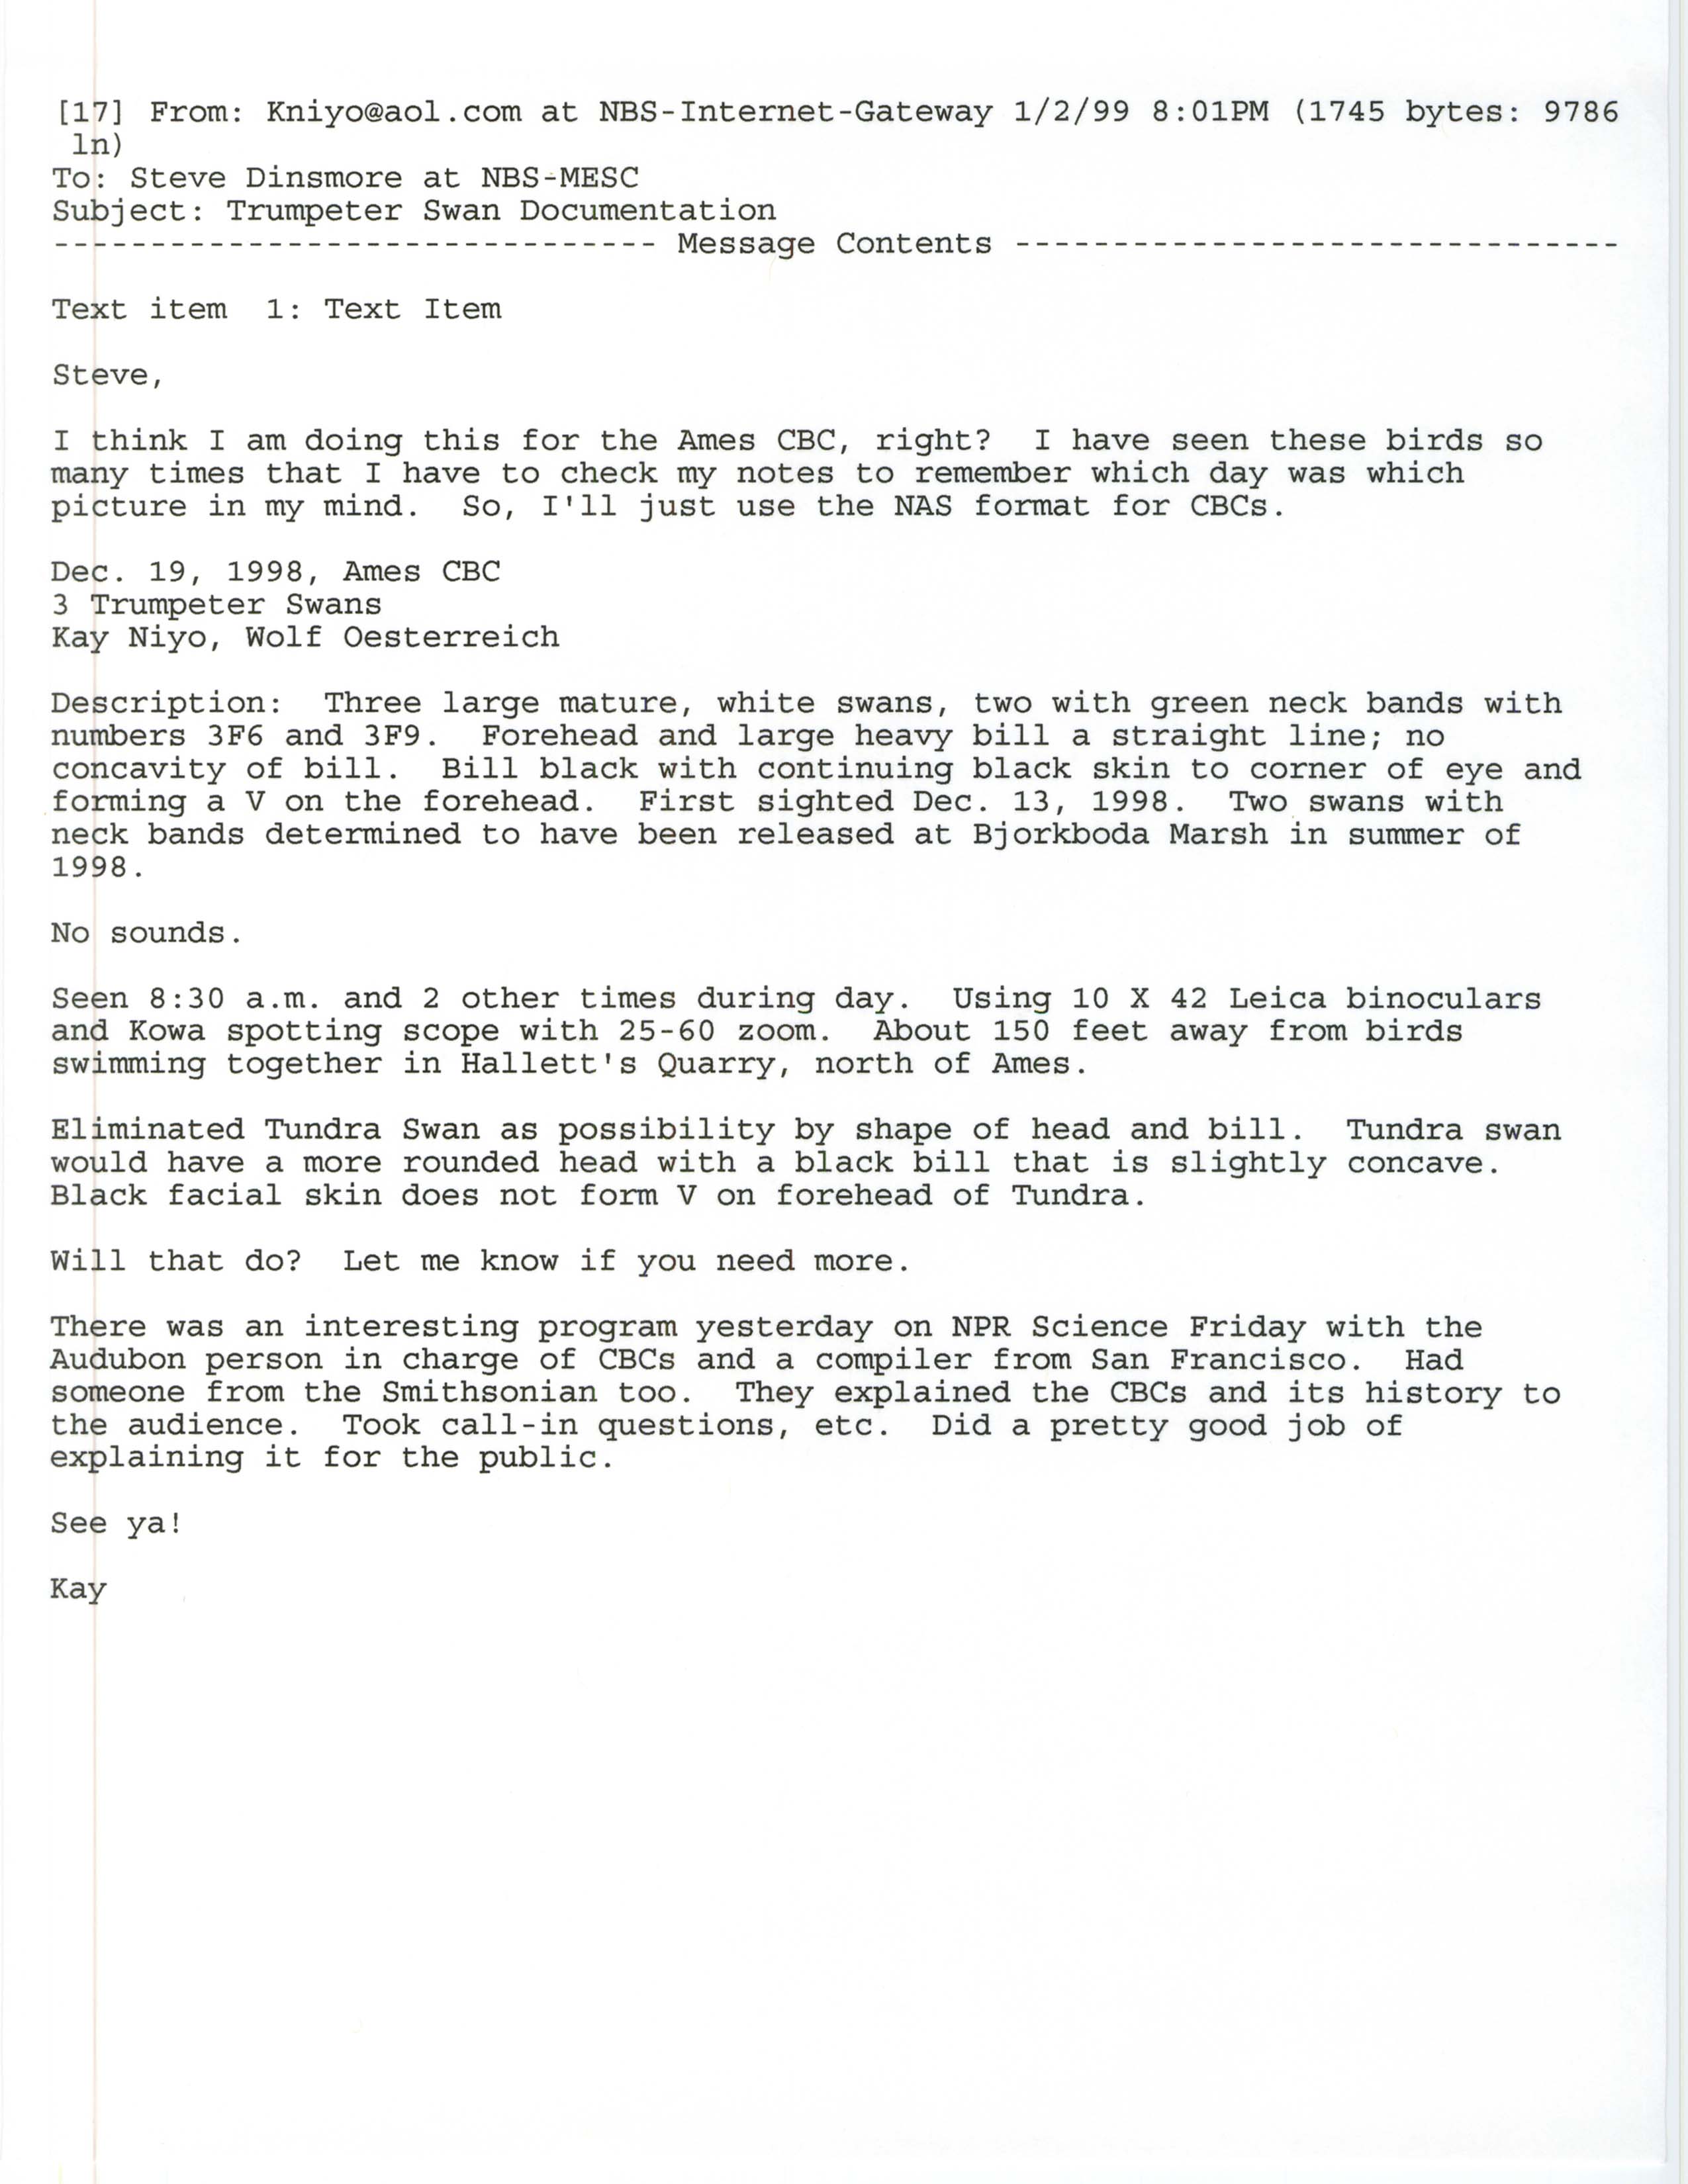 Kayleen Niyo email to Steven Dinsmore regarding a Trumpeter Swan sighting, 1998